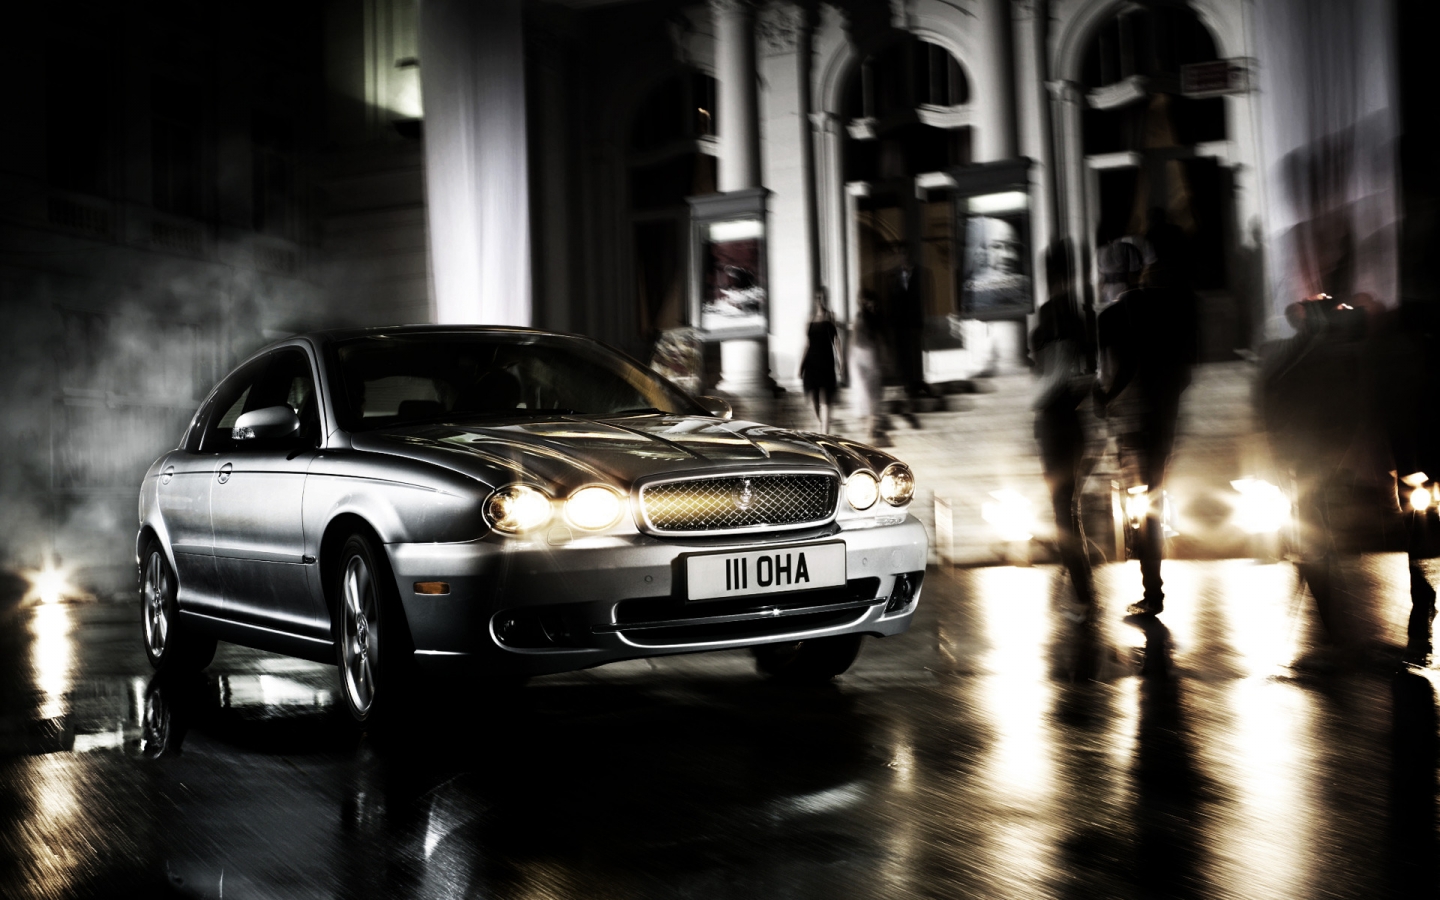 Jaguar X-Type 2008 Rush for 1440 x 900 widescreen resolution